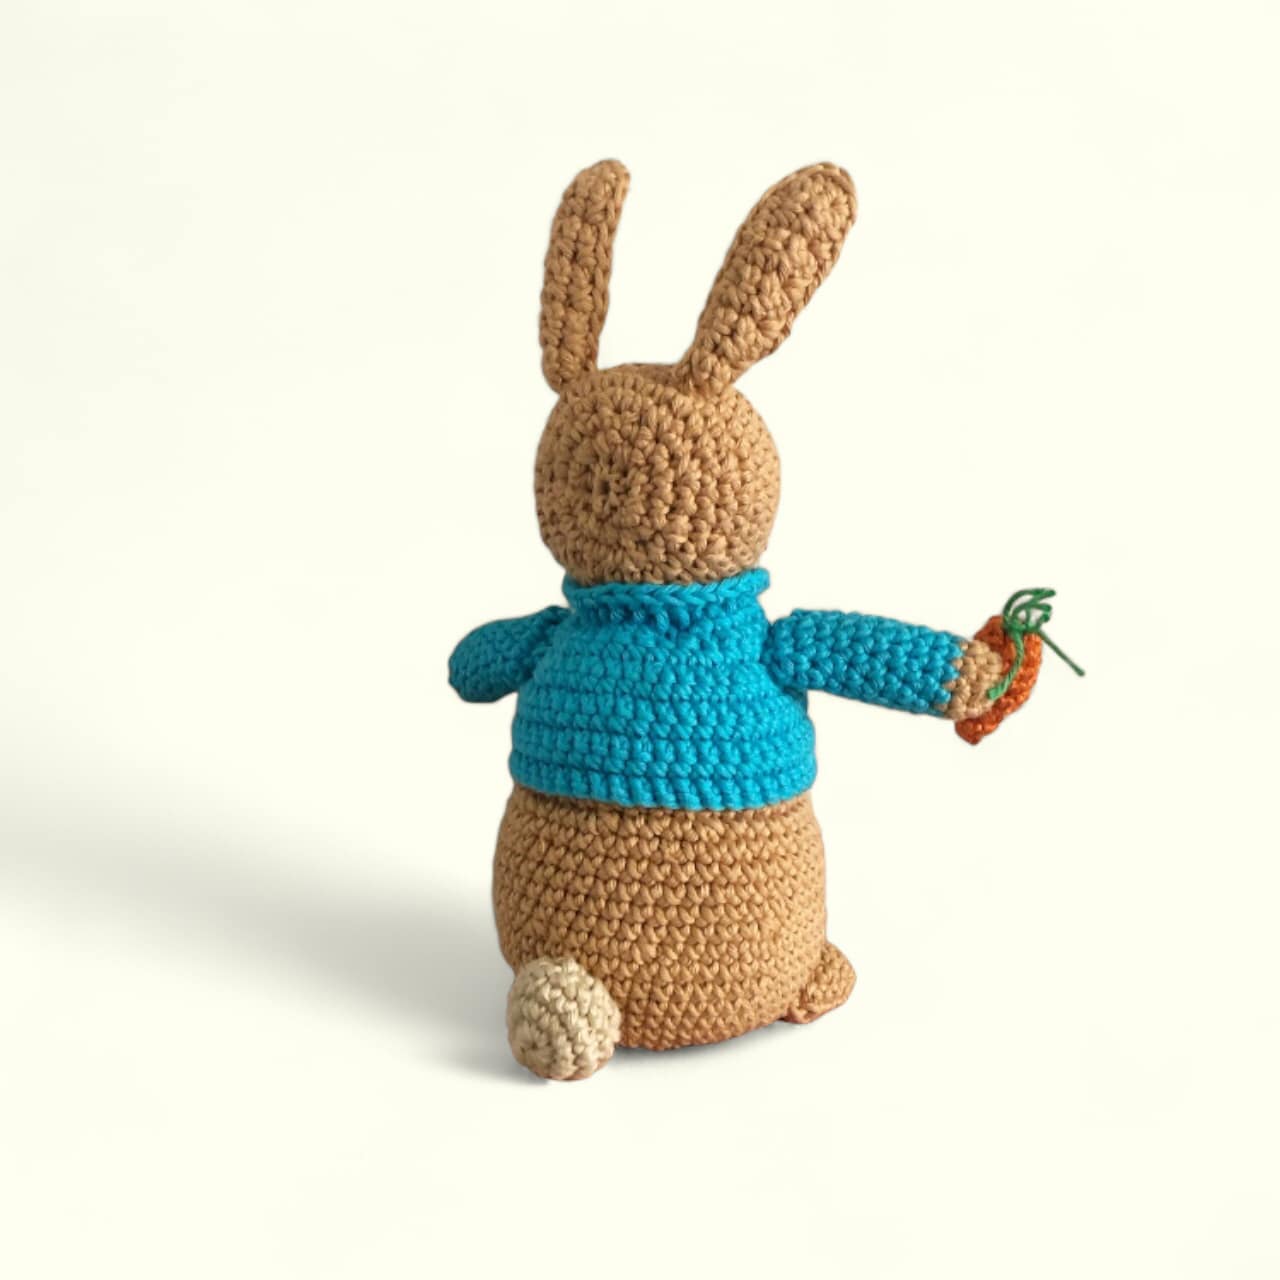 PATTERN: Crochet Peter Rabbit PDF